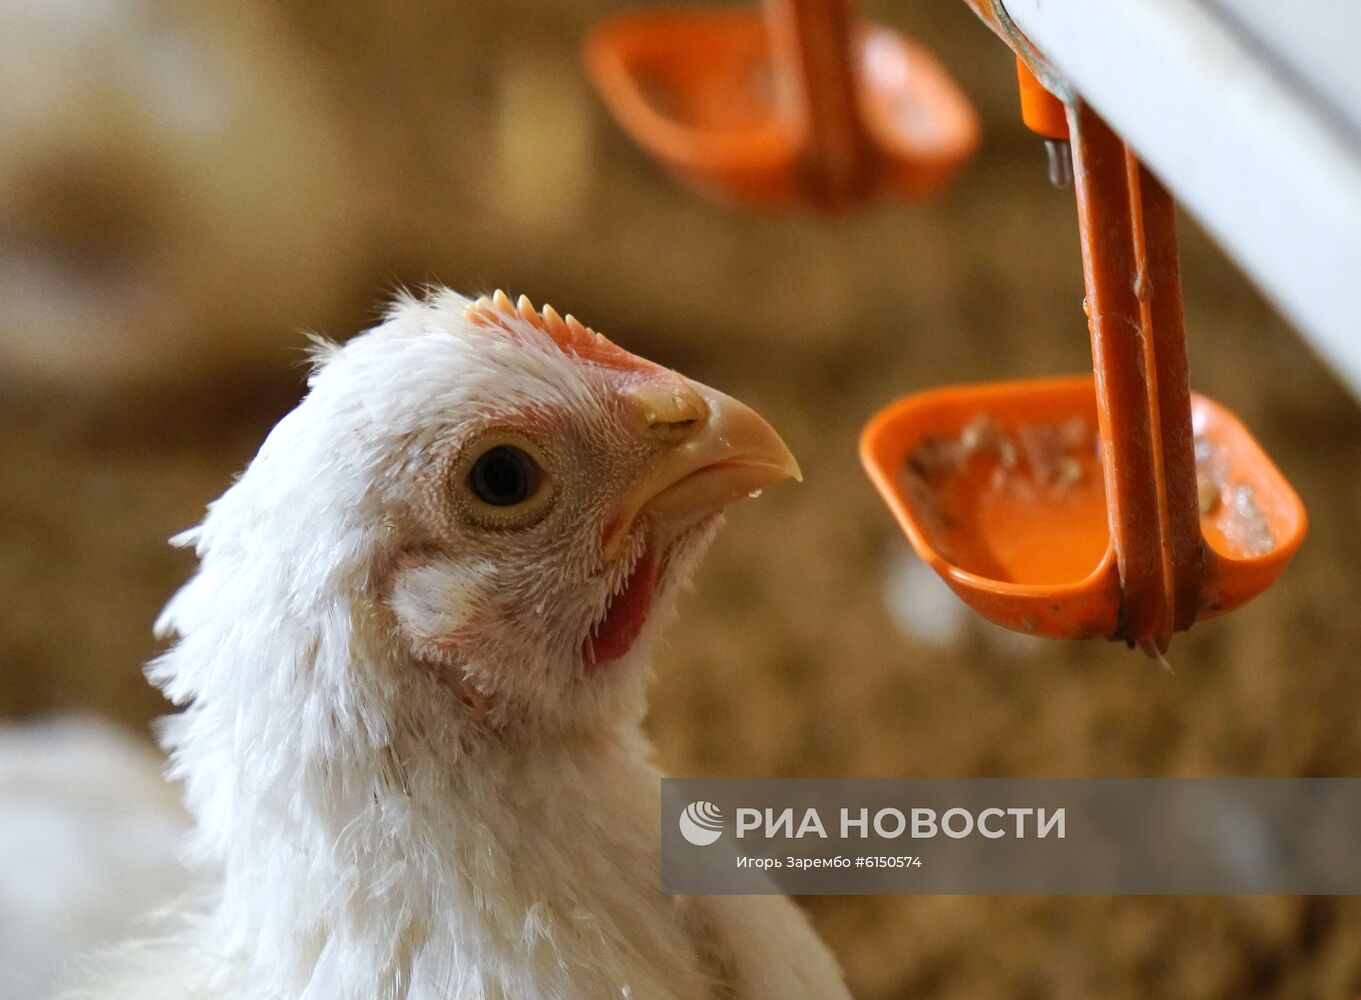 Работа птицефабрики в Калининграде